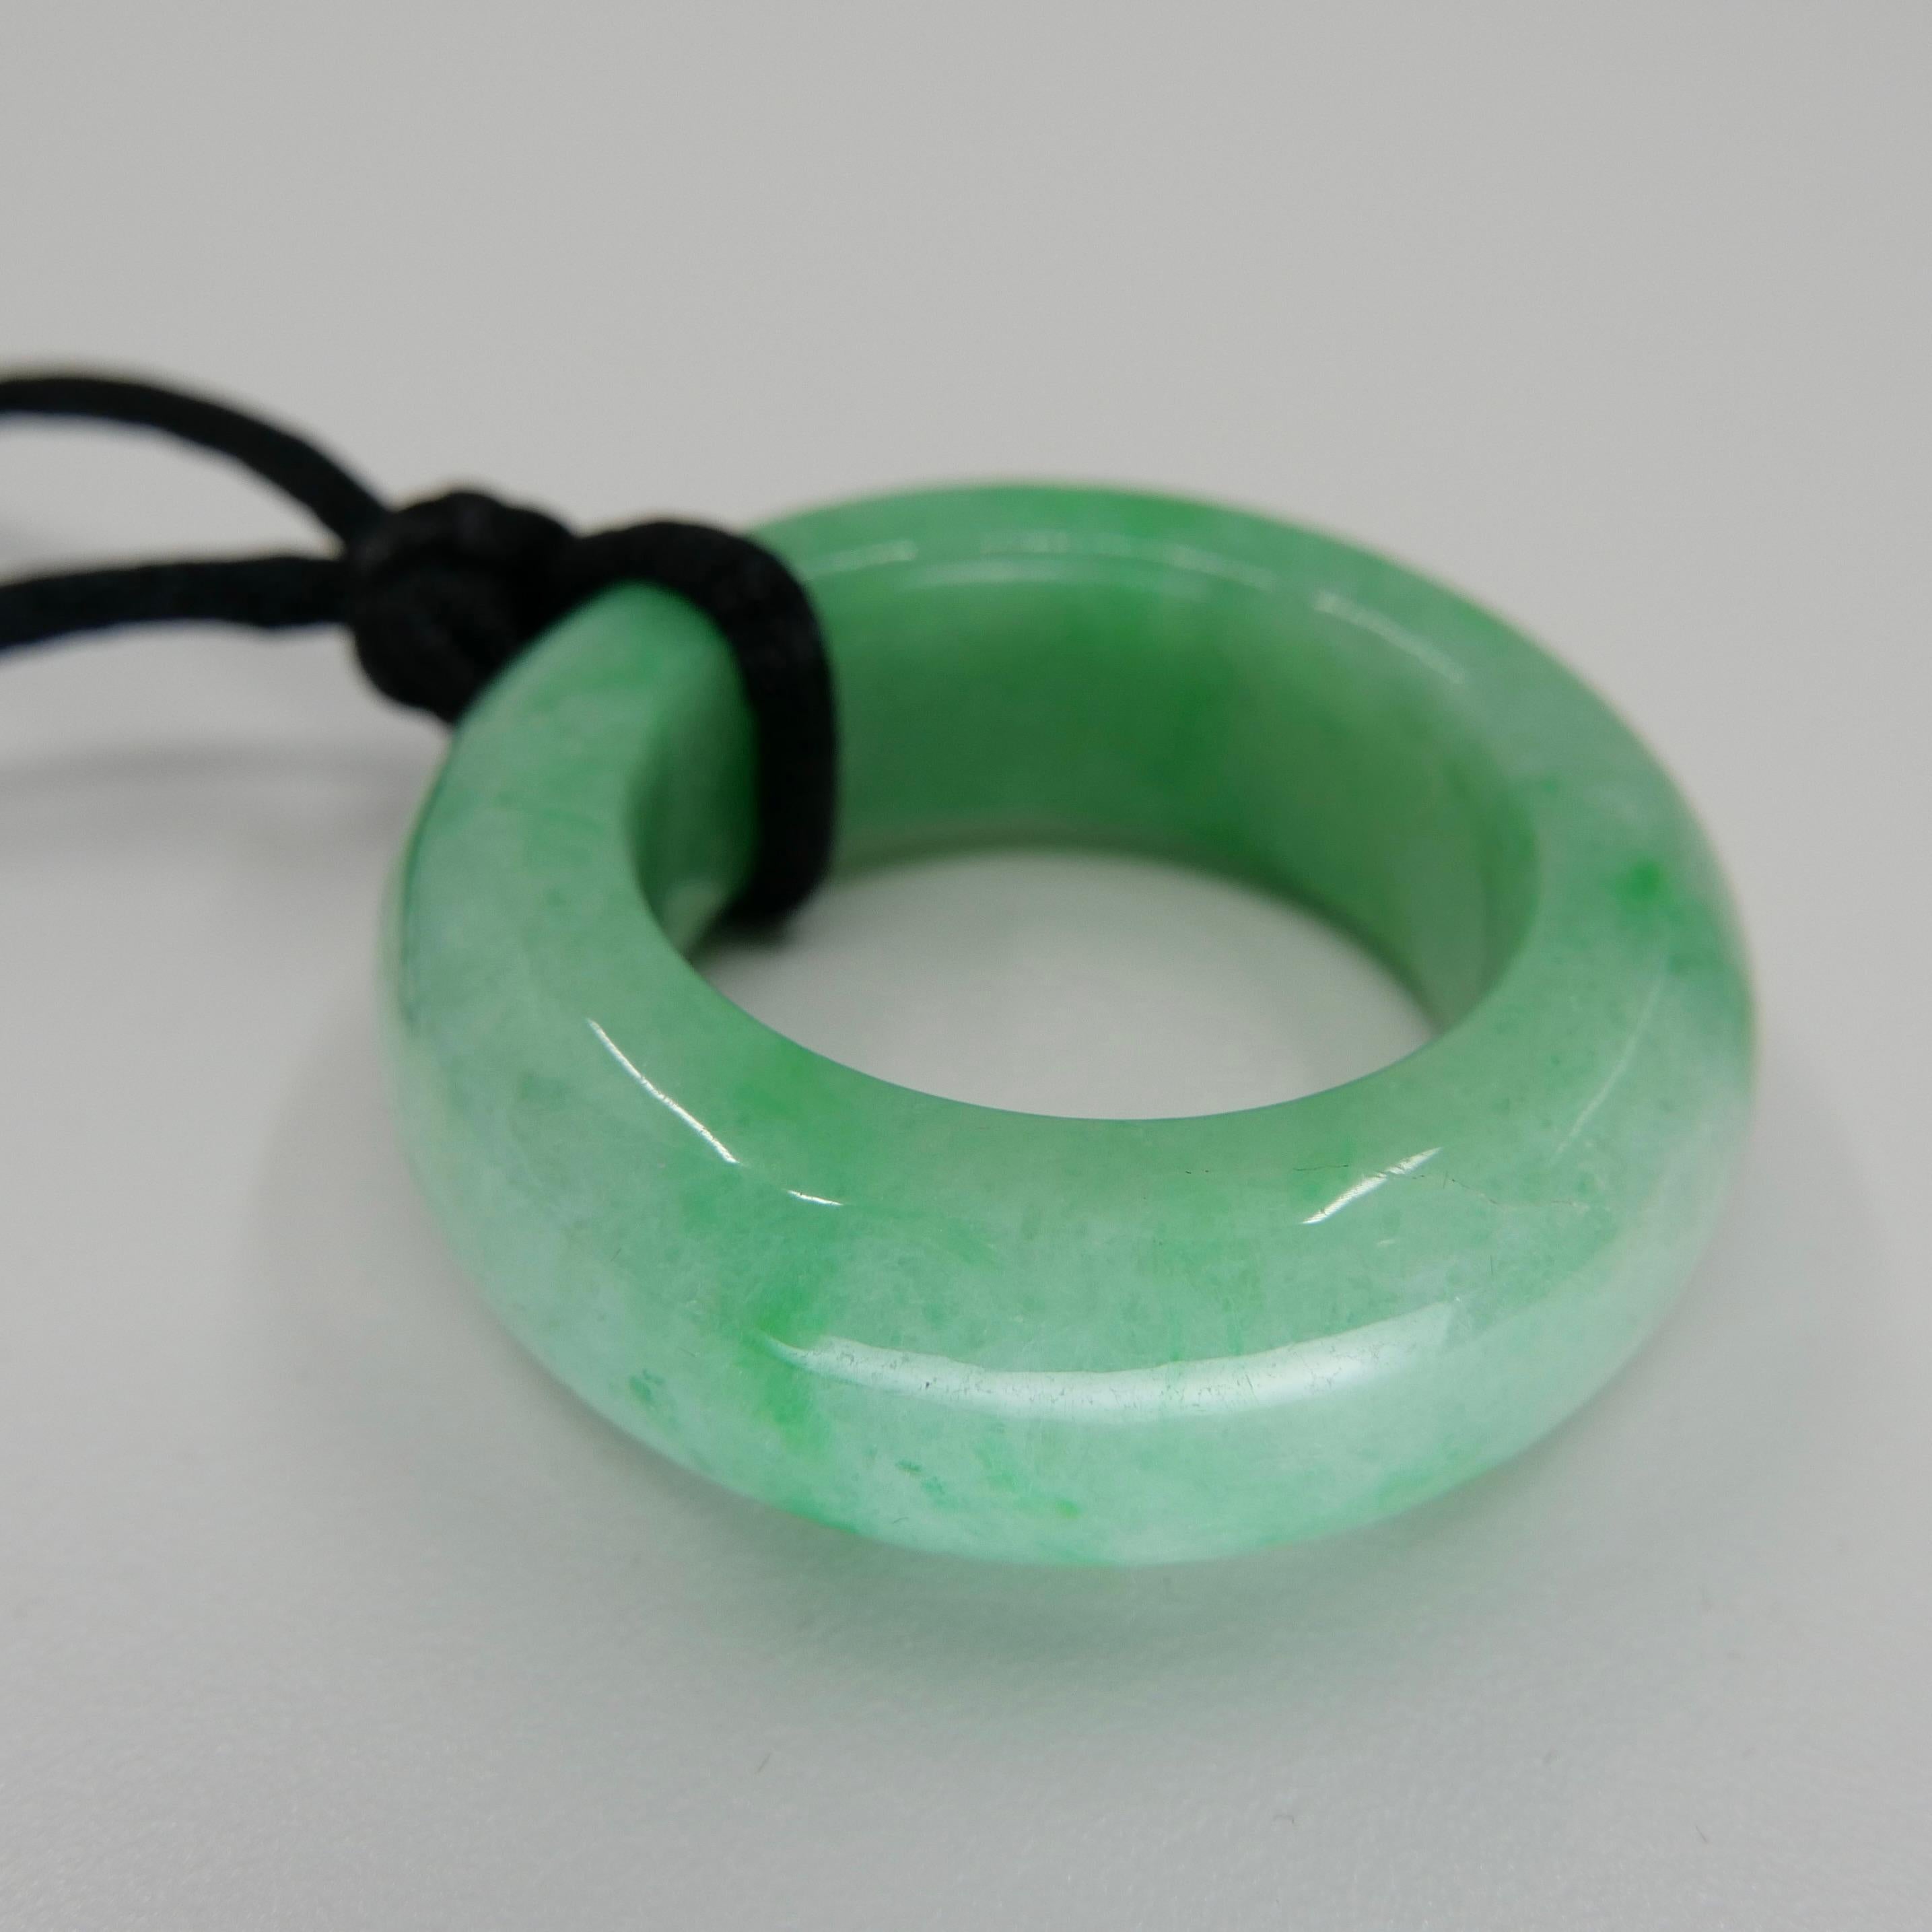 Certified 100 Carat Jadeite Jade Peace Pendant, Apple Green, Substantial For Sale 11